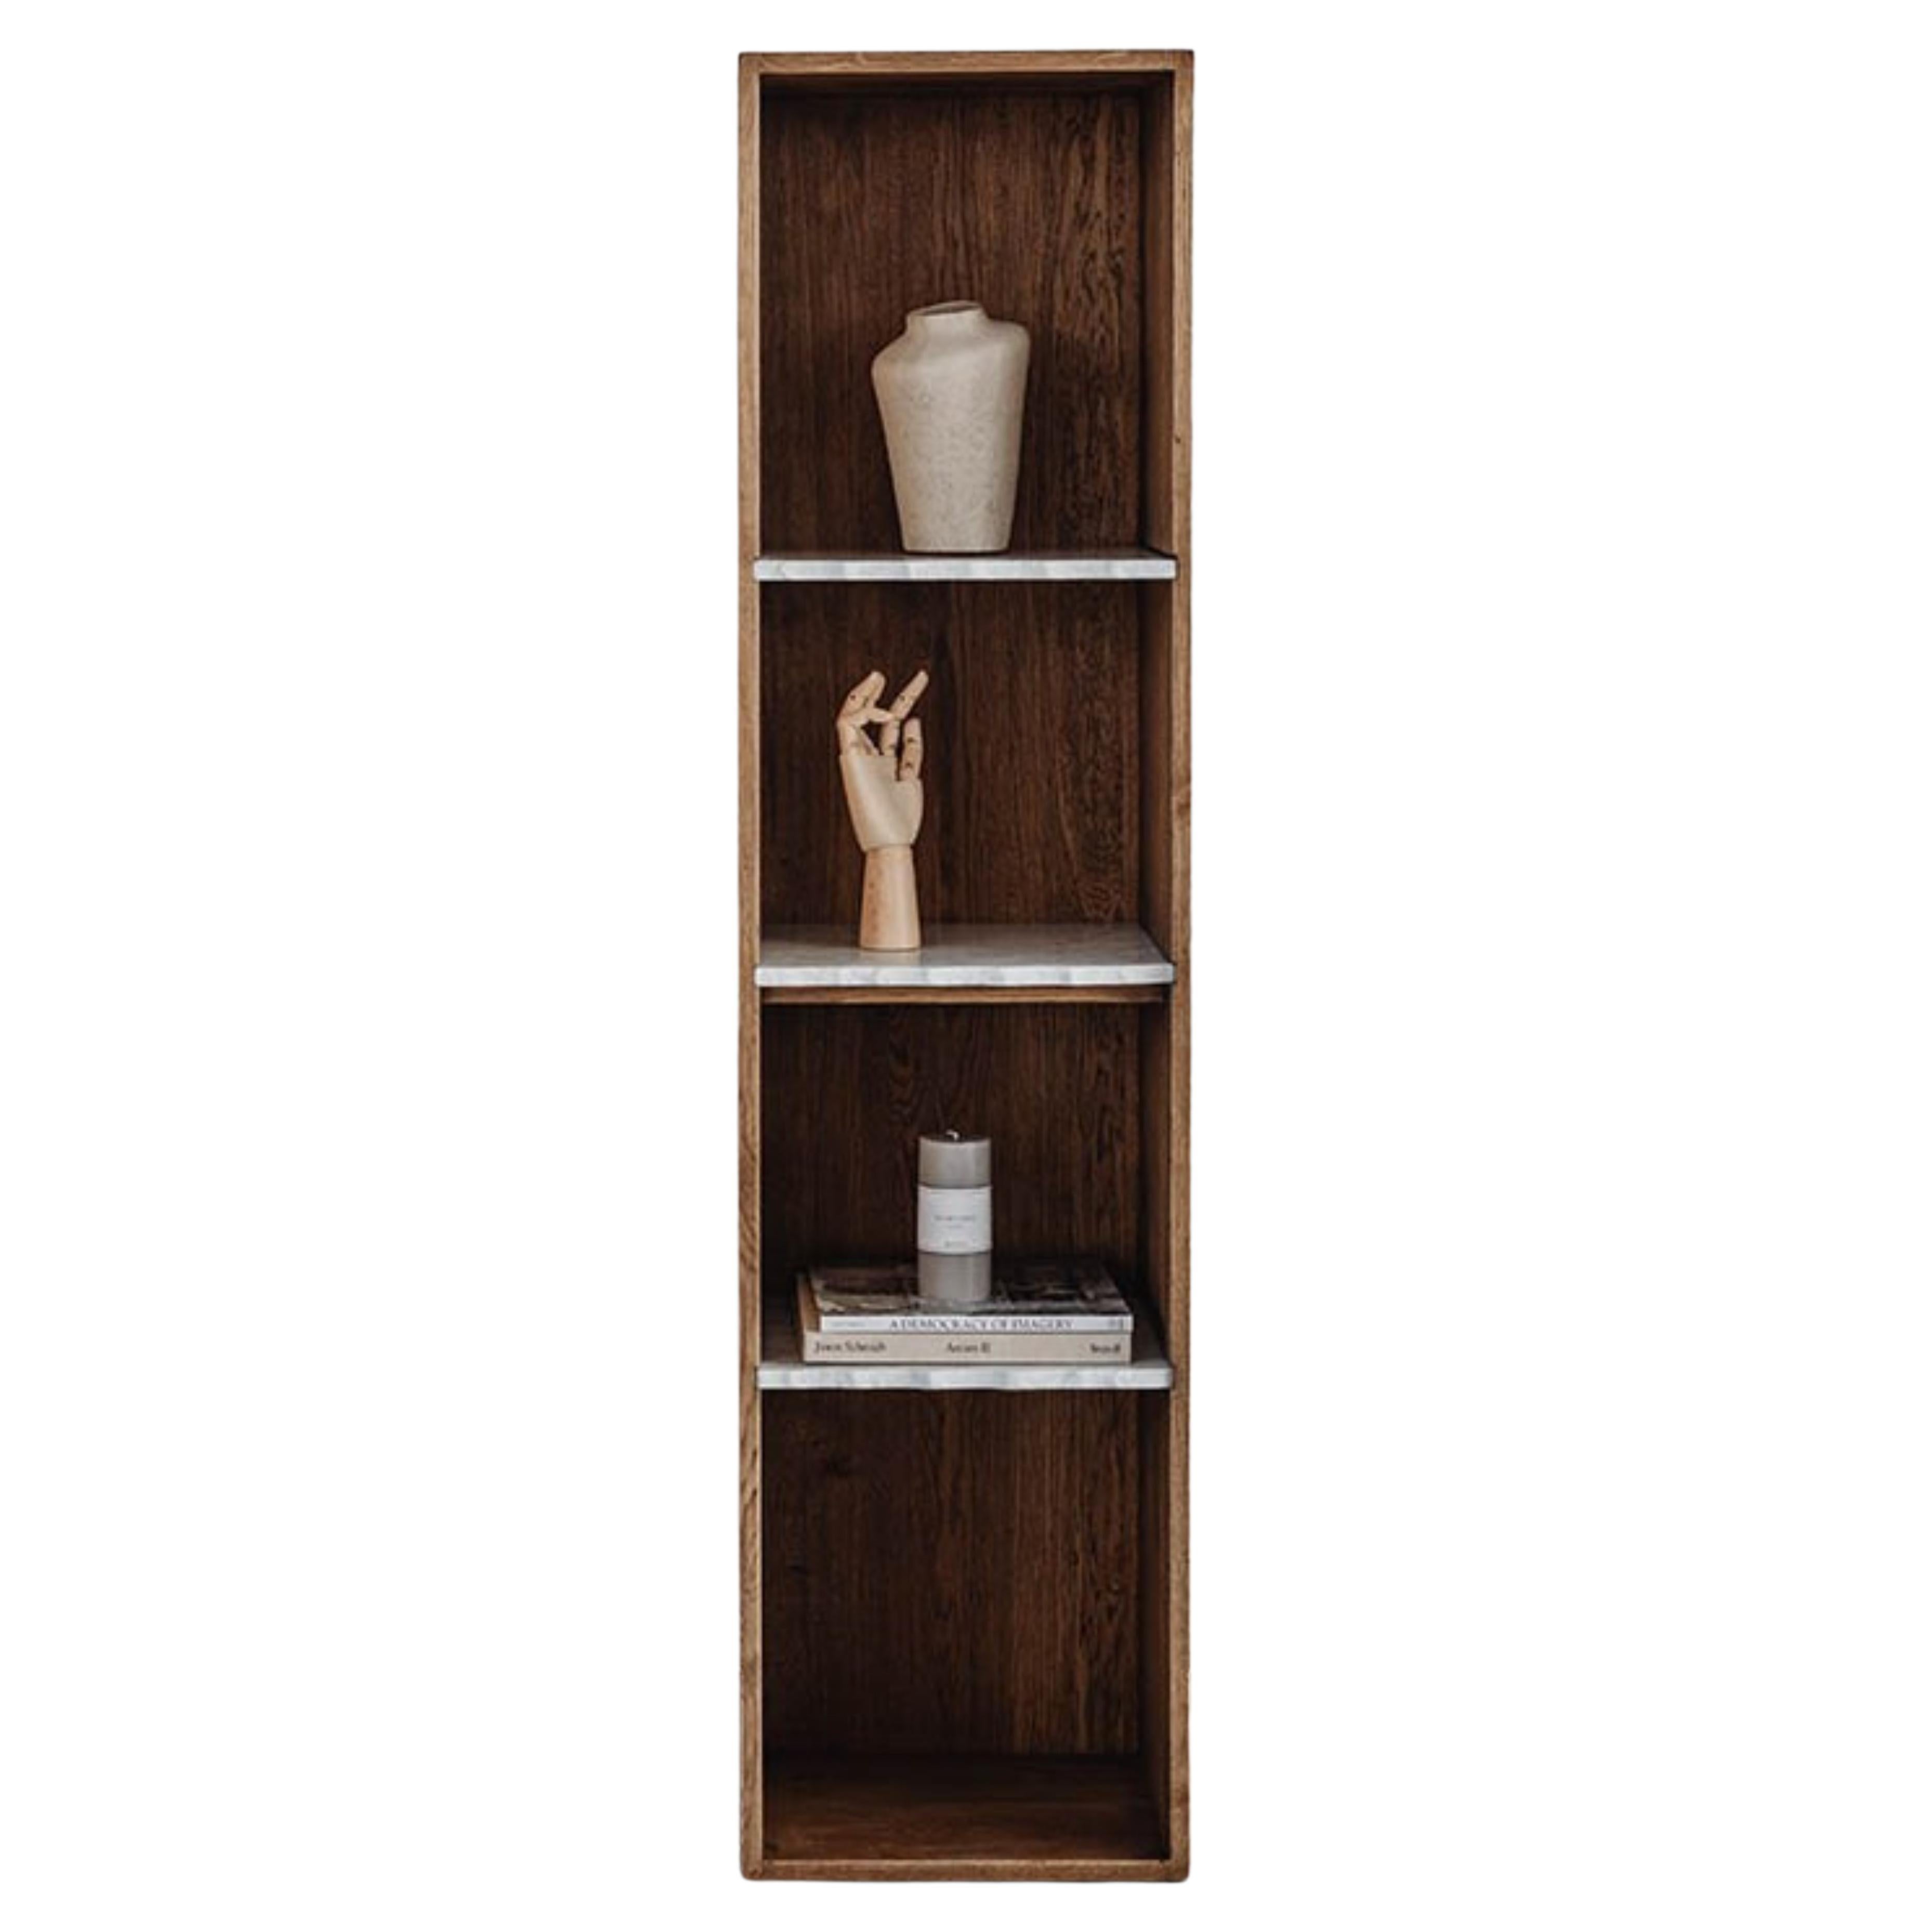 Wood Zuel Bookcase by Un’common